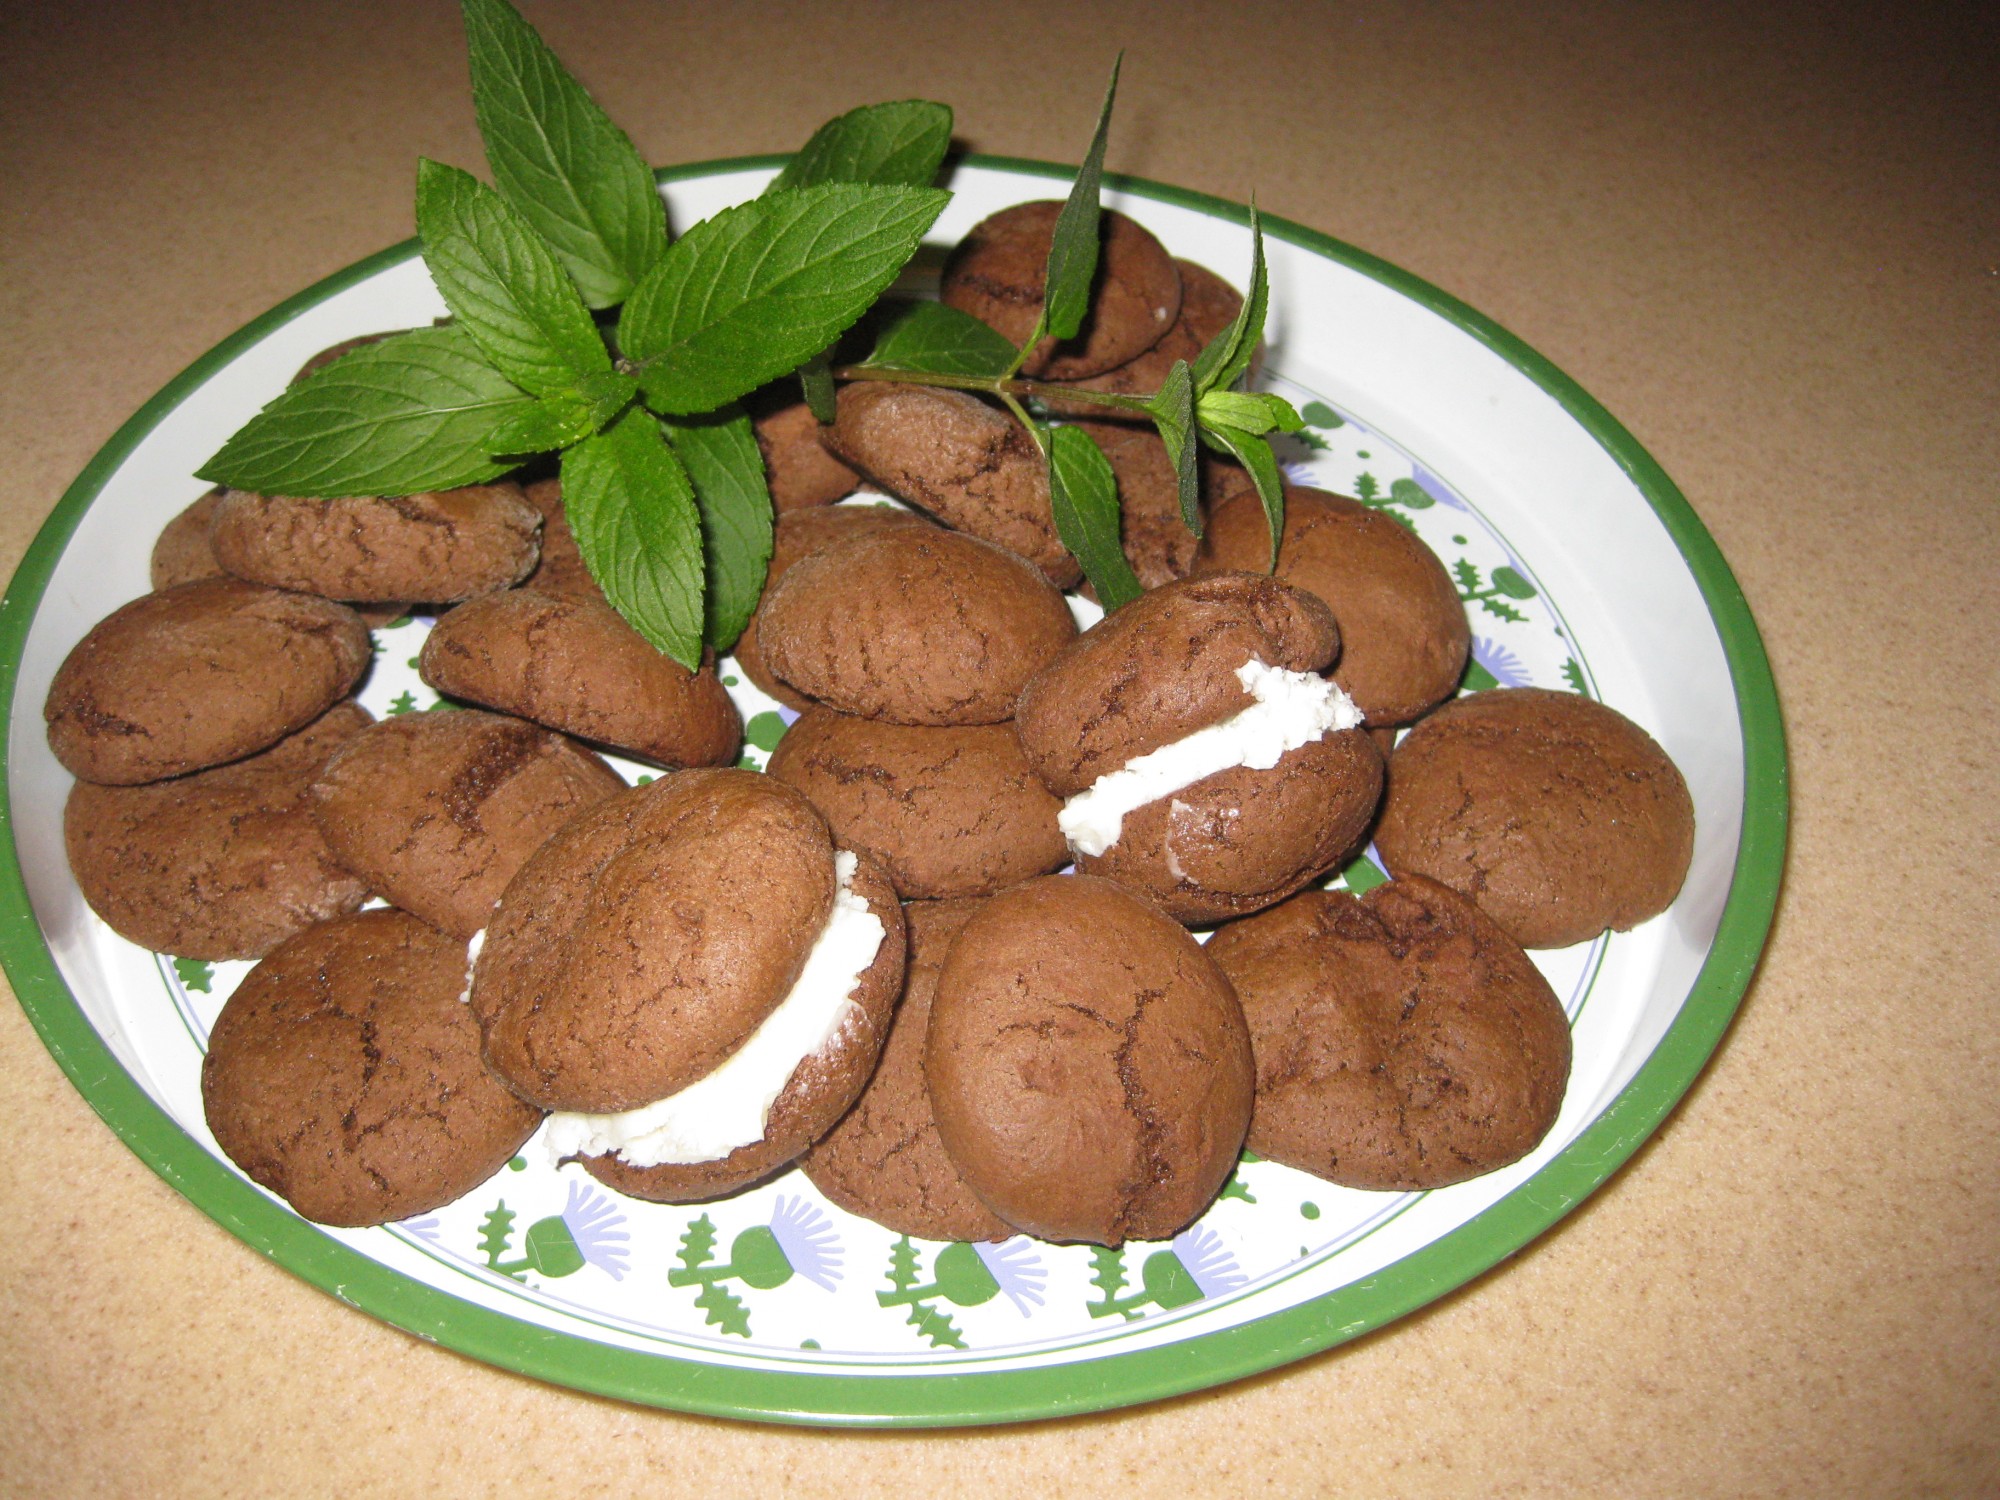 Mint-Chocolate cookies